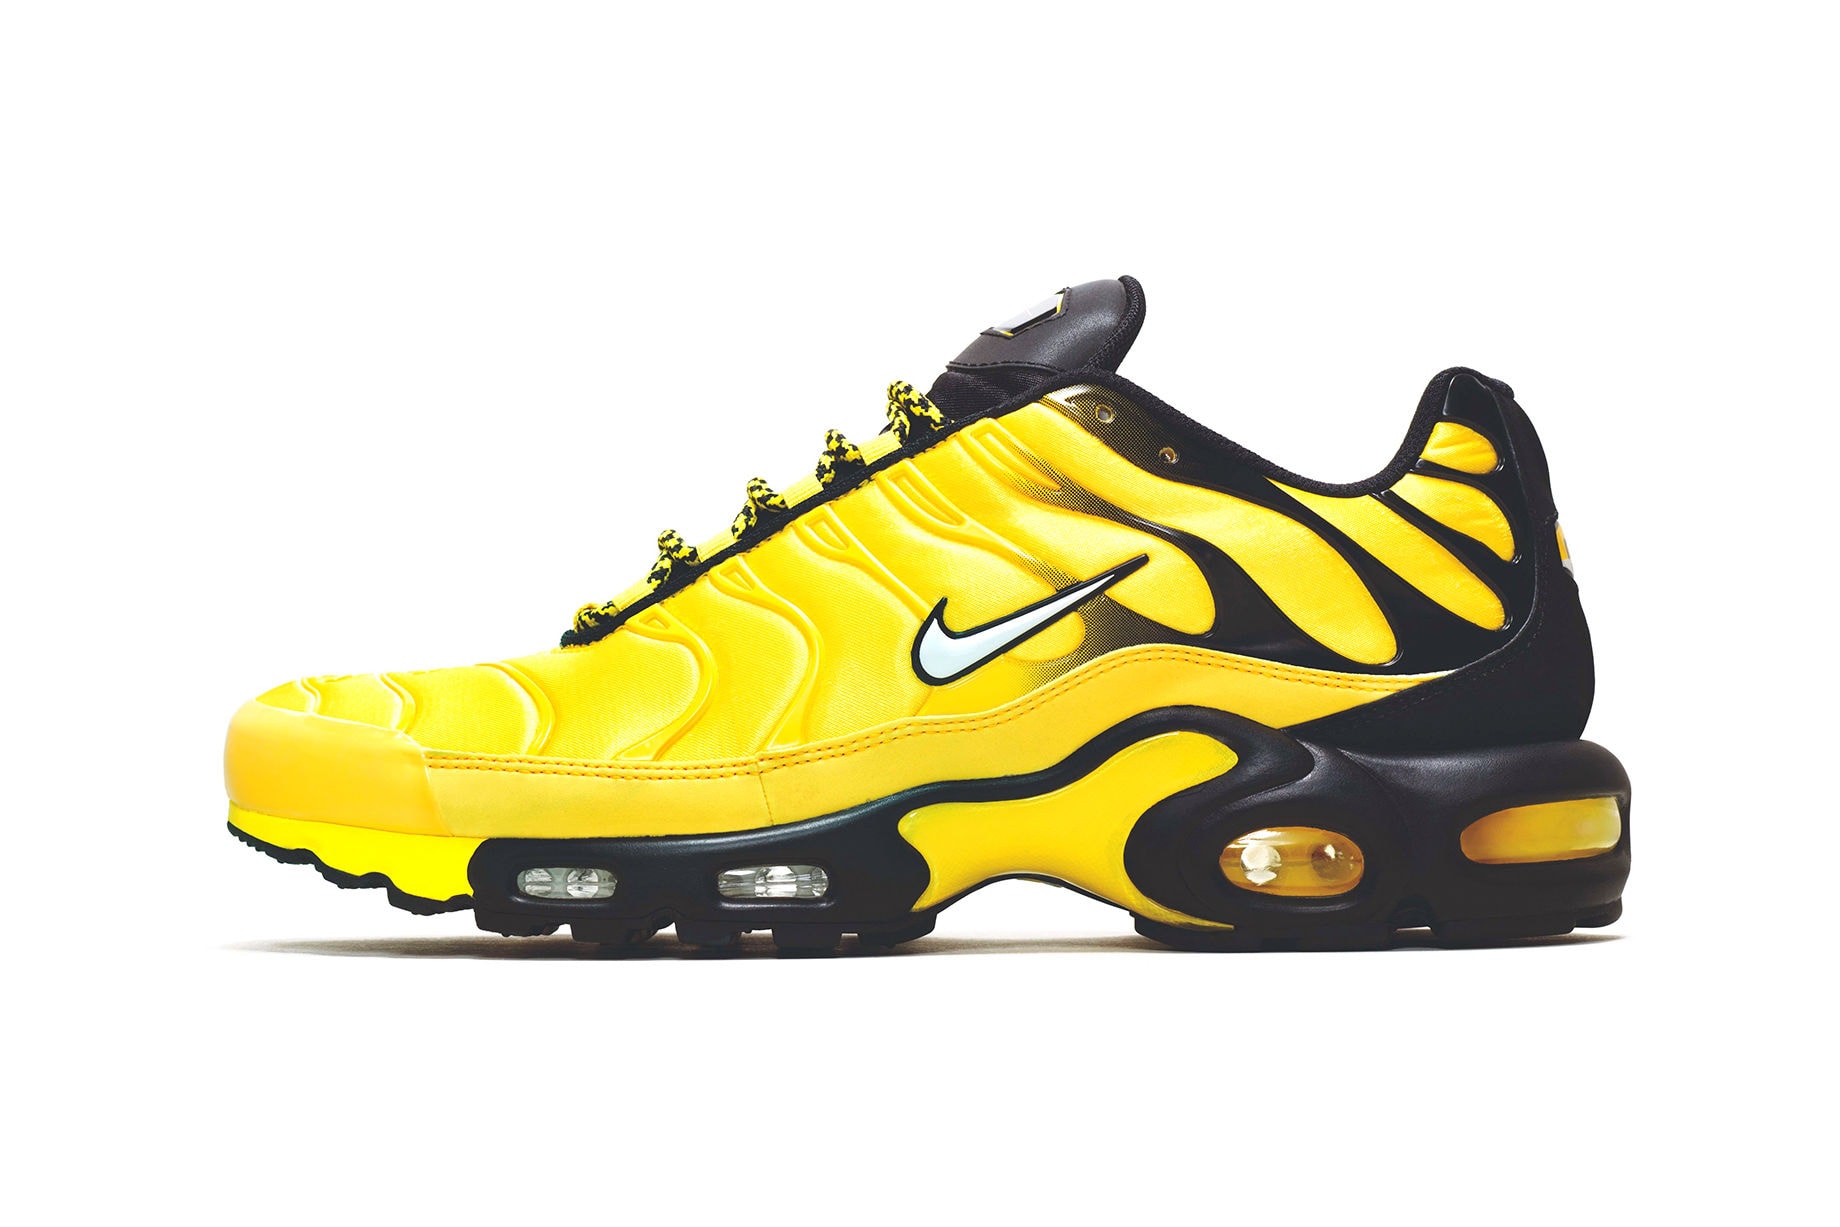 Nike Air "Frequency" Pack Release foot locker air max plus air max 97 air max 95 yellow black white sneakers